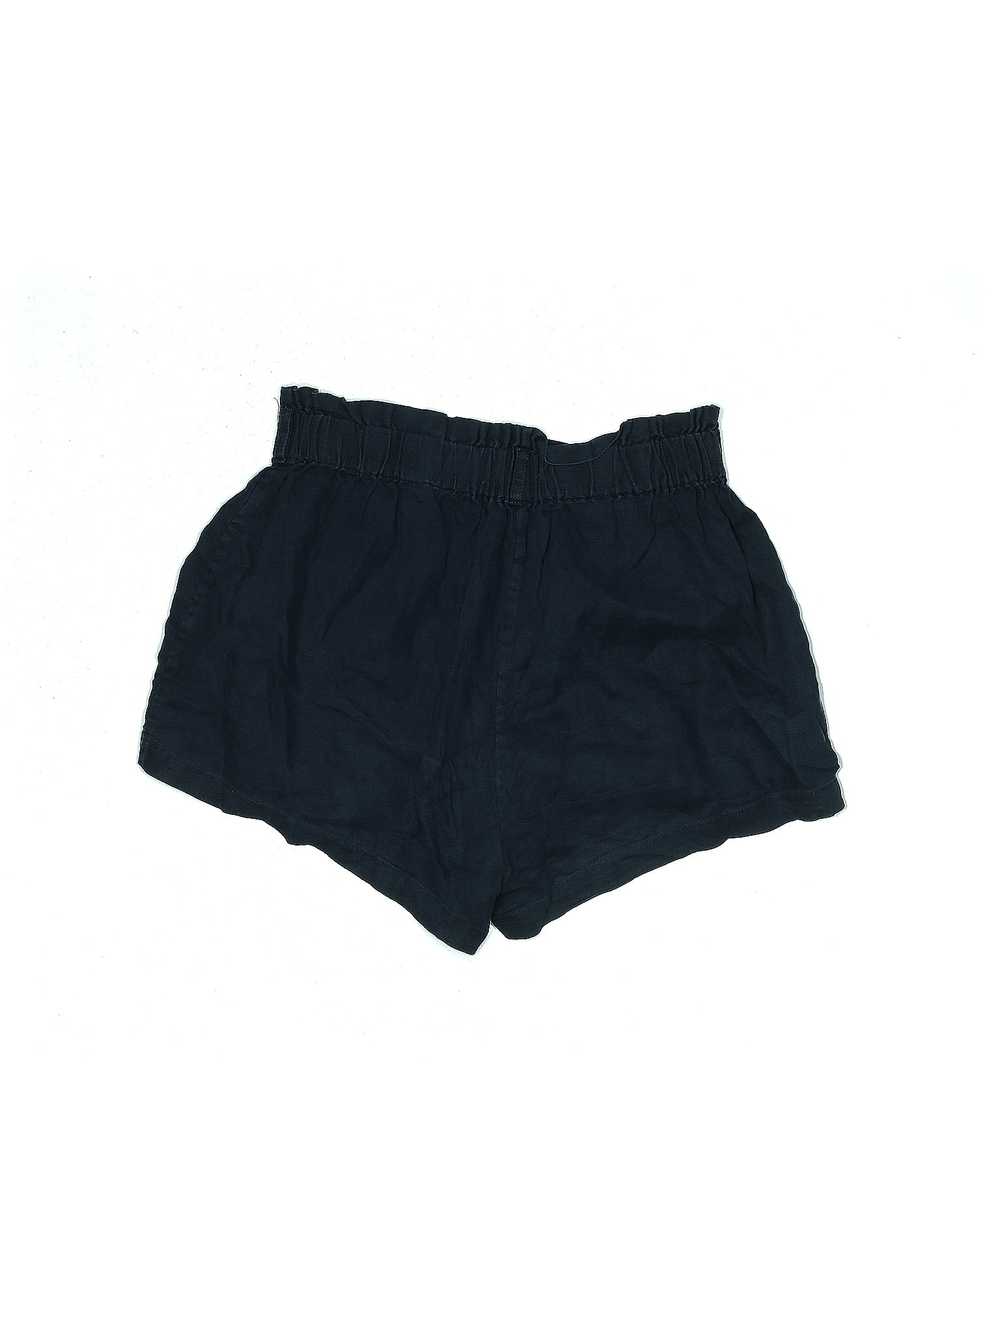 Onia Women Black Khaki Shorts M - image 2